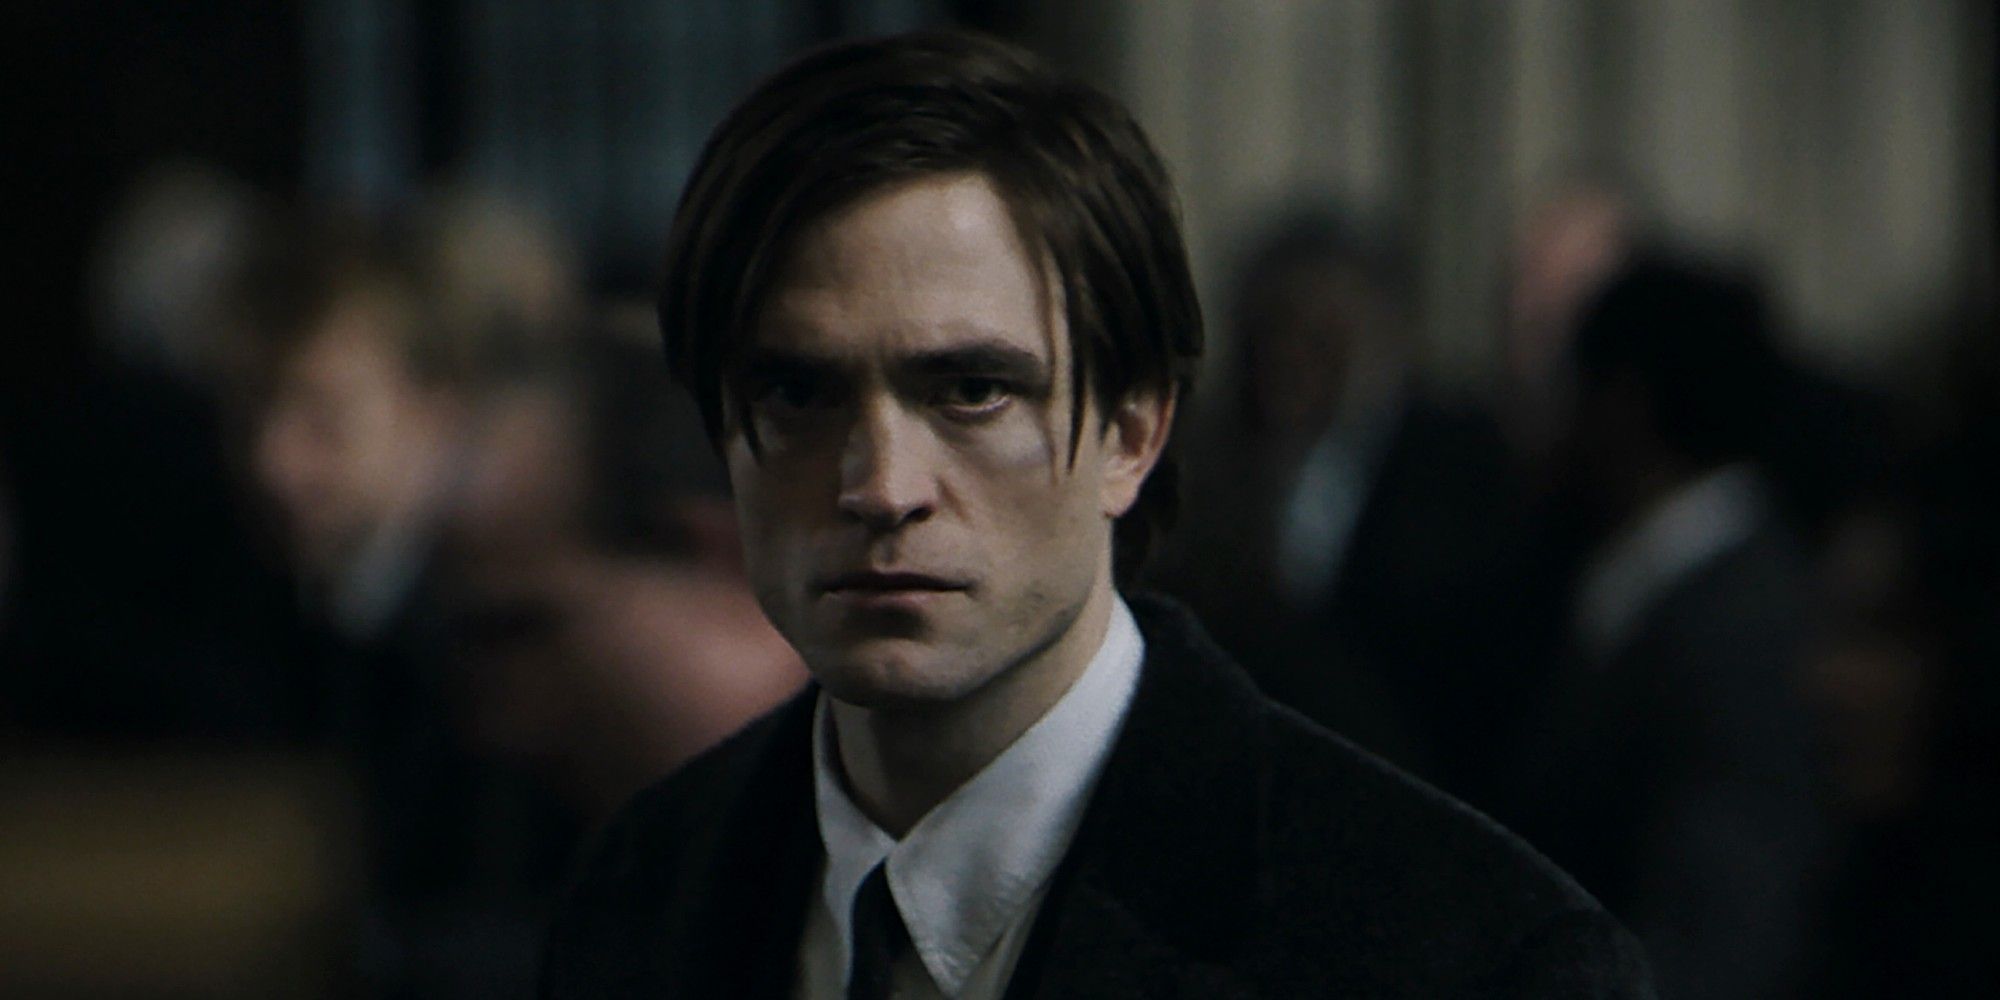 The Batman Robert Pattinson as Bruce Wayne Funeral Scene